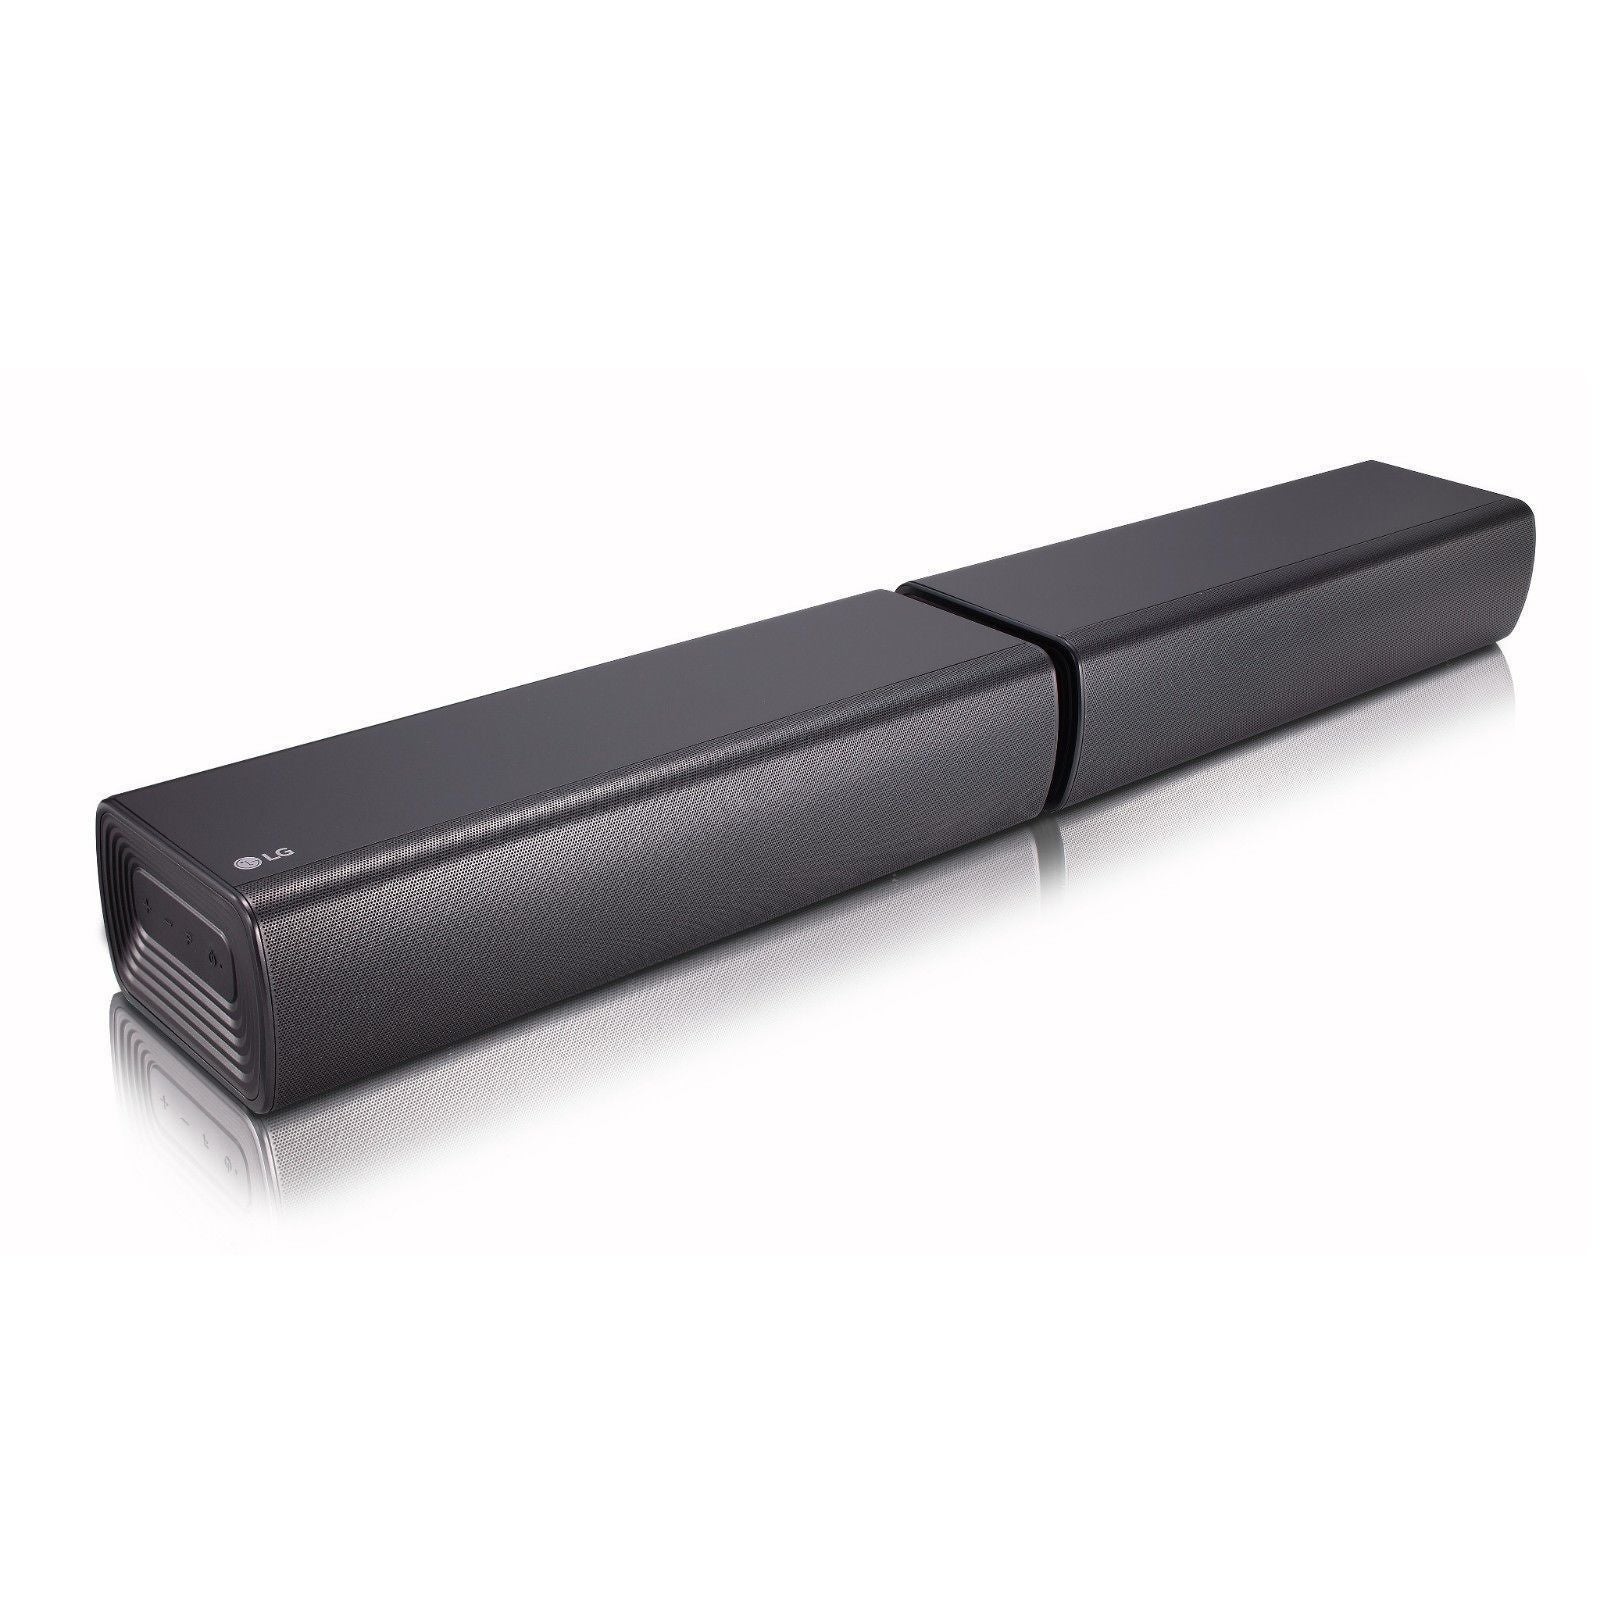 LG SJ7 Sound Bar Flex Dual Speaker System with Wireless Subwoofer